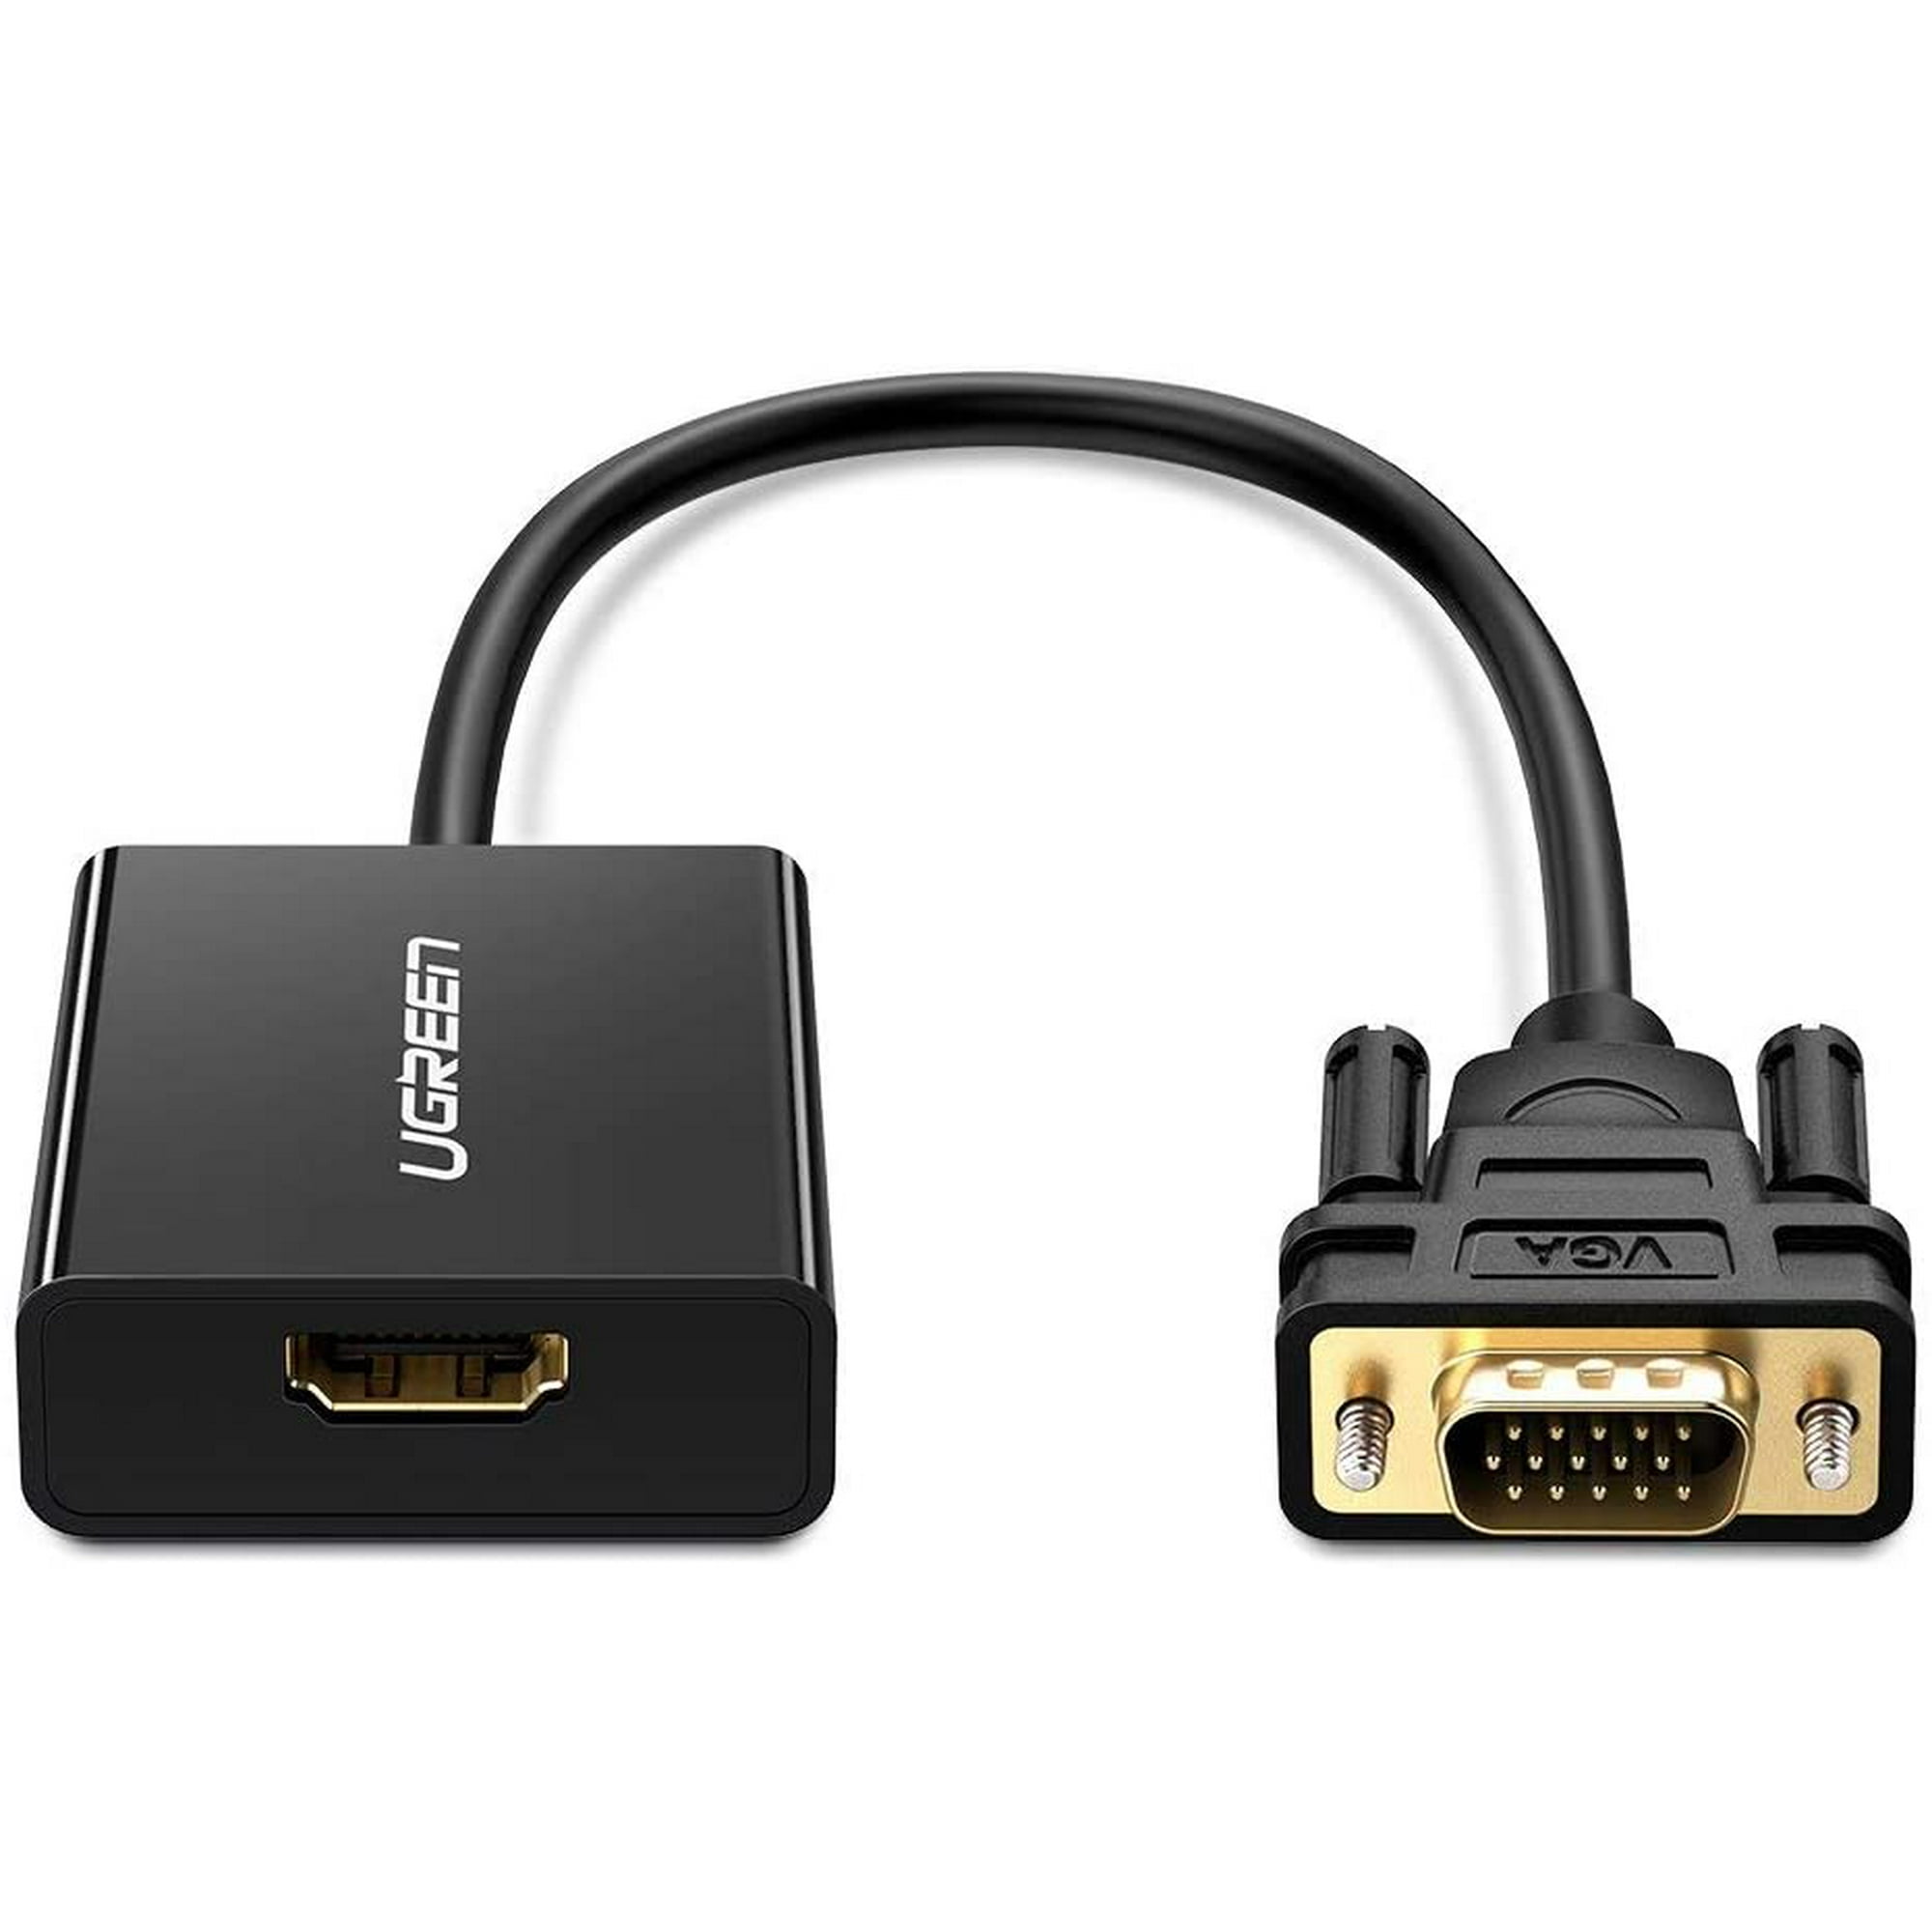 Переходник для hdmi кабеля. HDMI to VGA+HDMI Adapter. Переходник с ВГА на HDMI. Переходник HDMI(male) to VGA(female) Adapter. Переходник DGMEDIA HDMI - VGA.